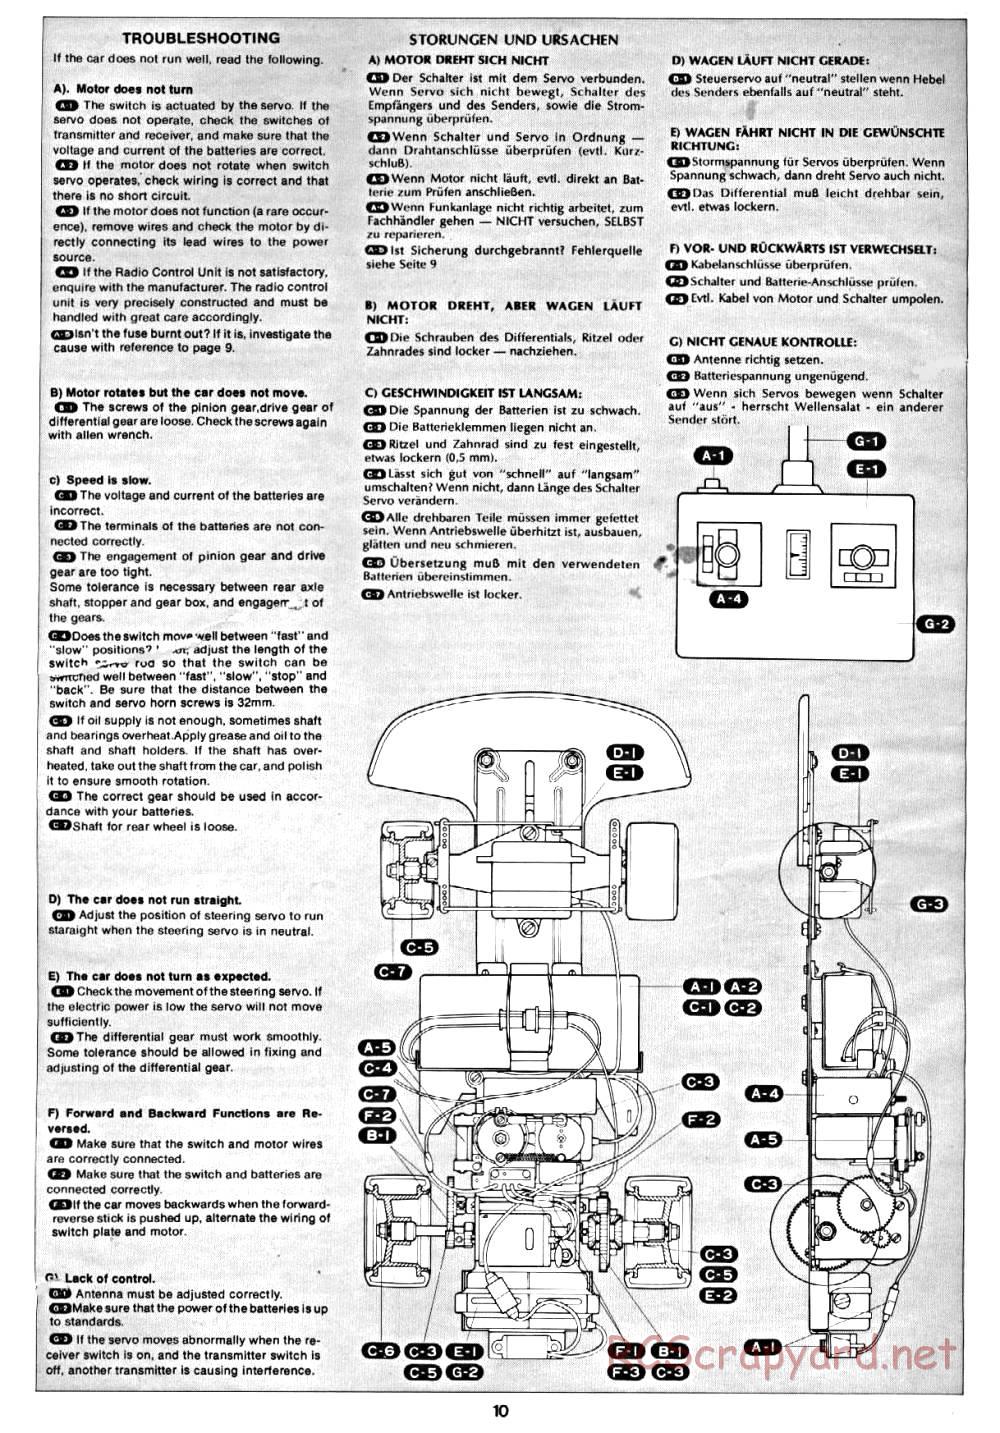 Tamiya - Martini Porsche 935 Turbo - 58002 - Manual - Page 10